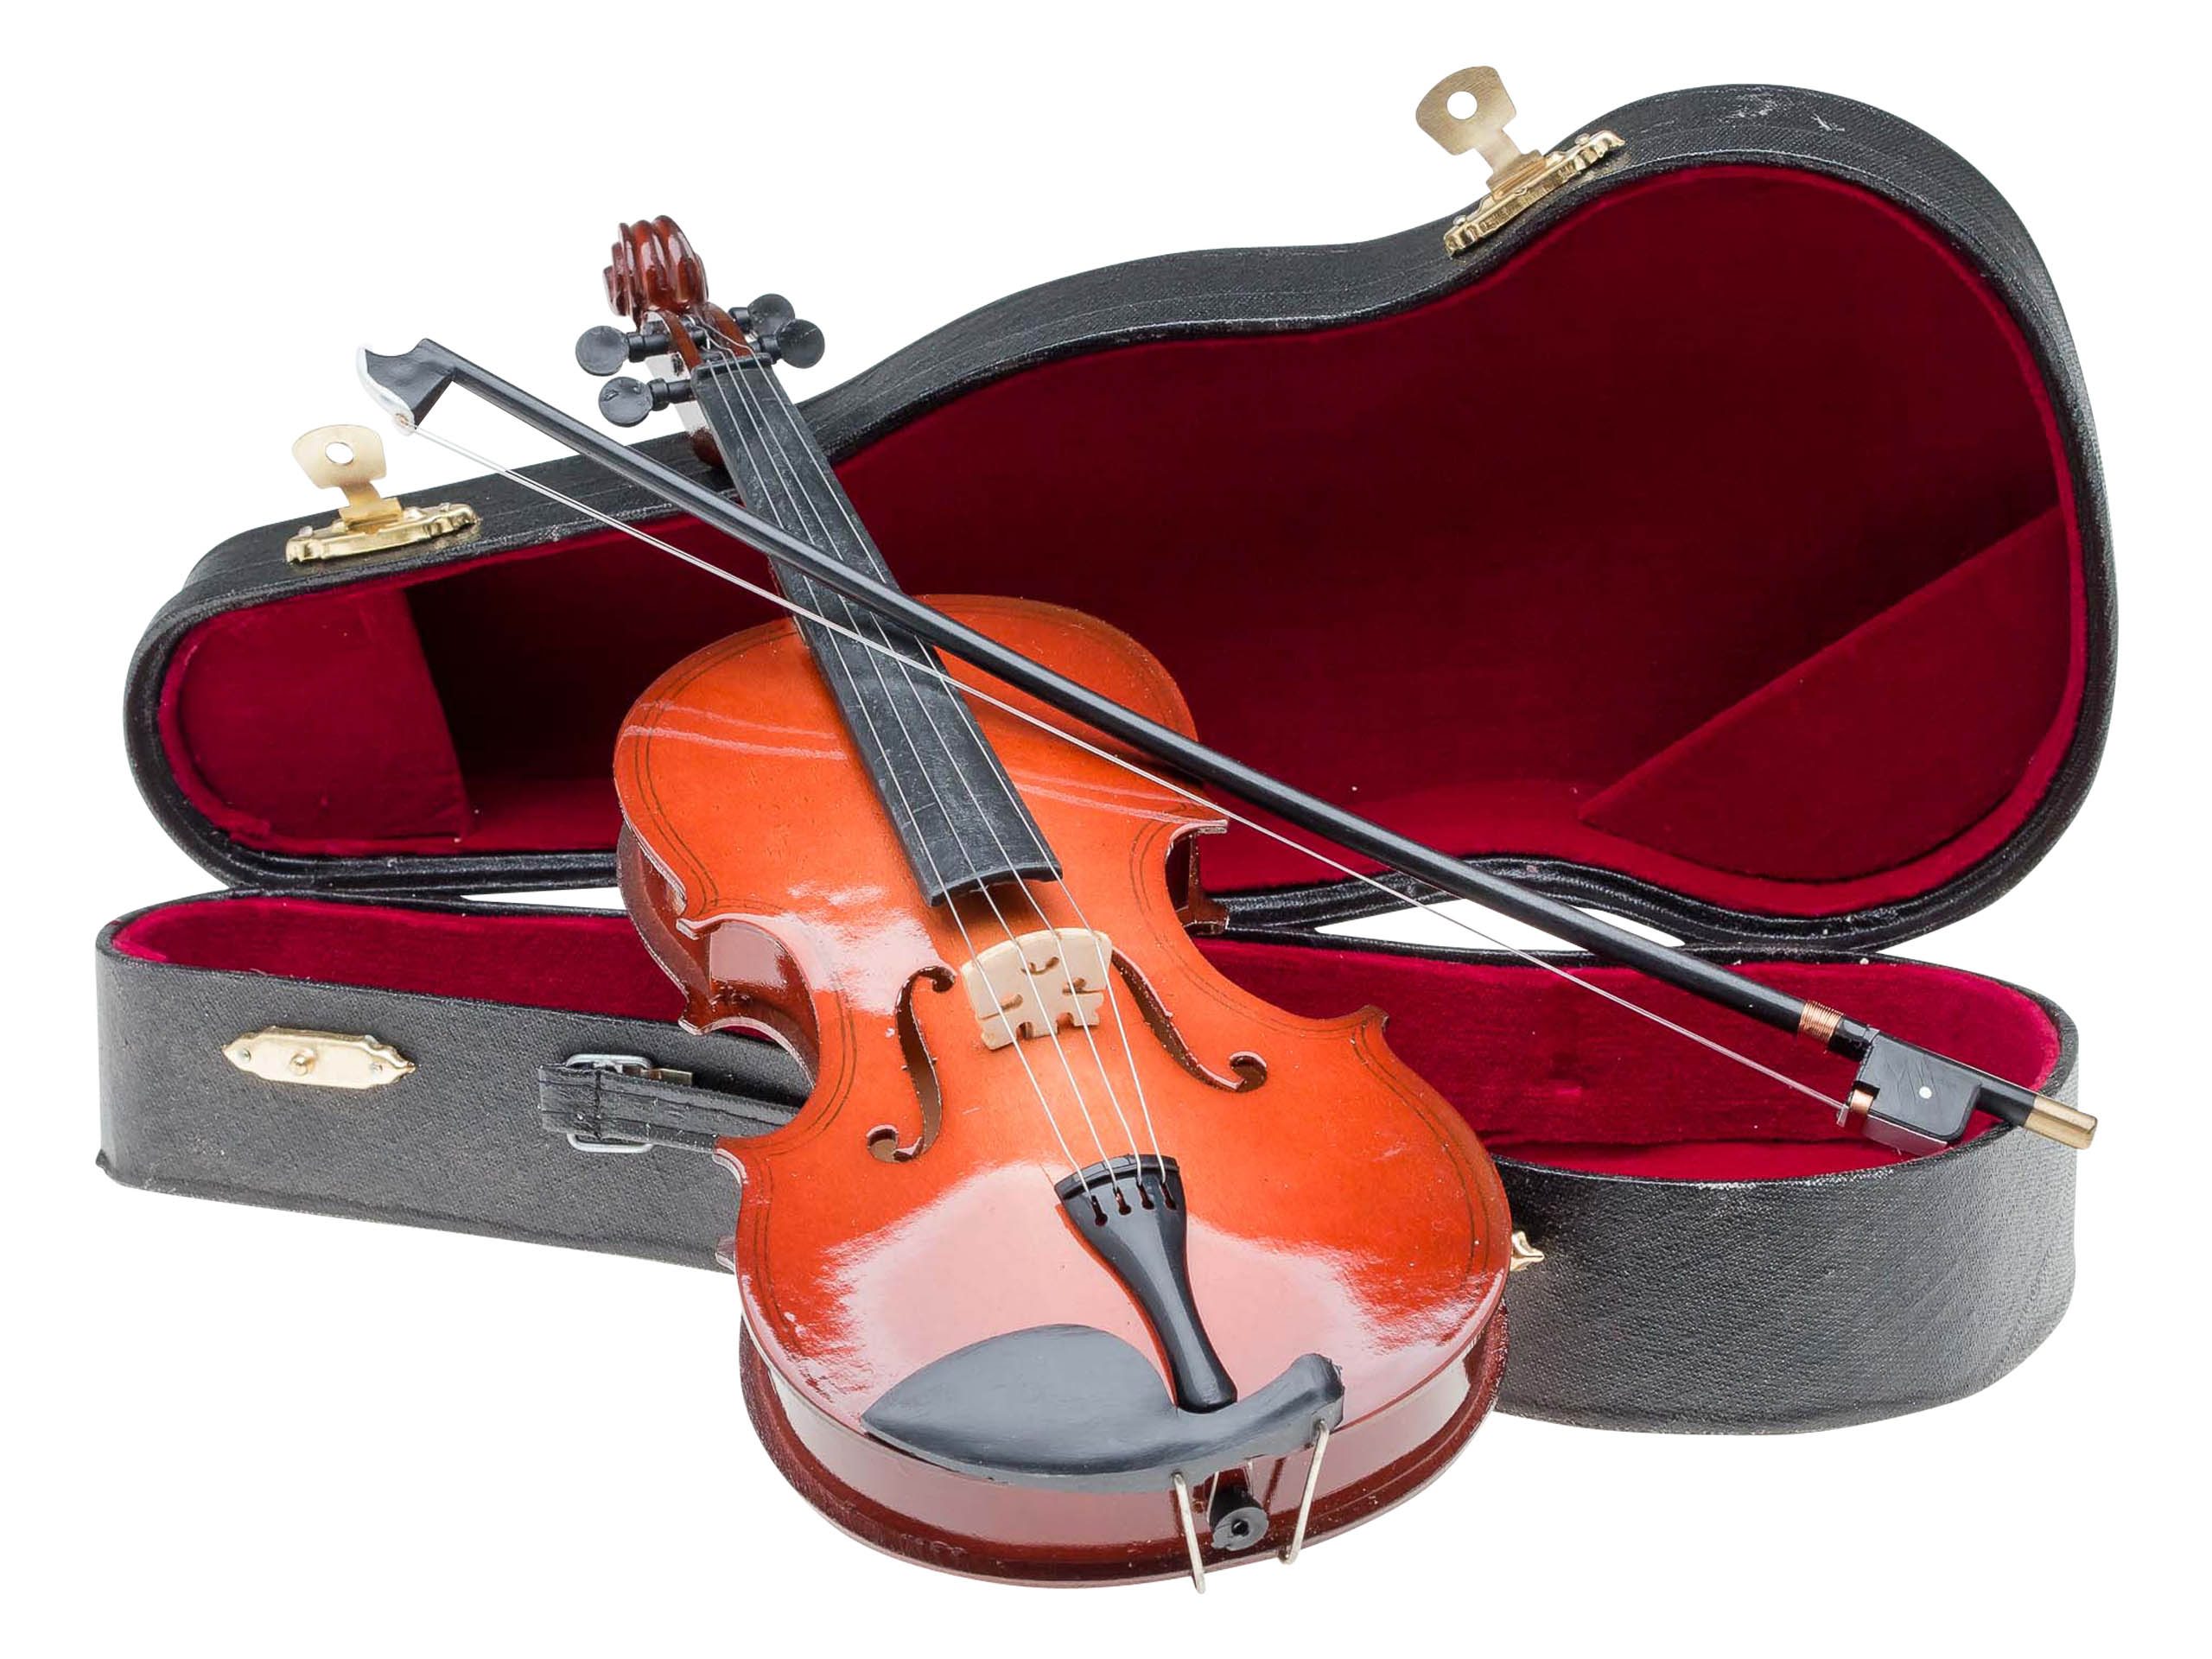 1/12 Maßstab Puppenhaus Miniatur Musikinstrument hölzerne Violine mit Box 